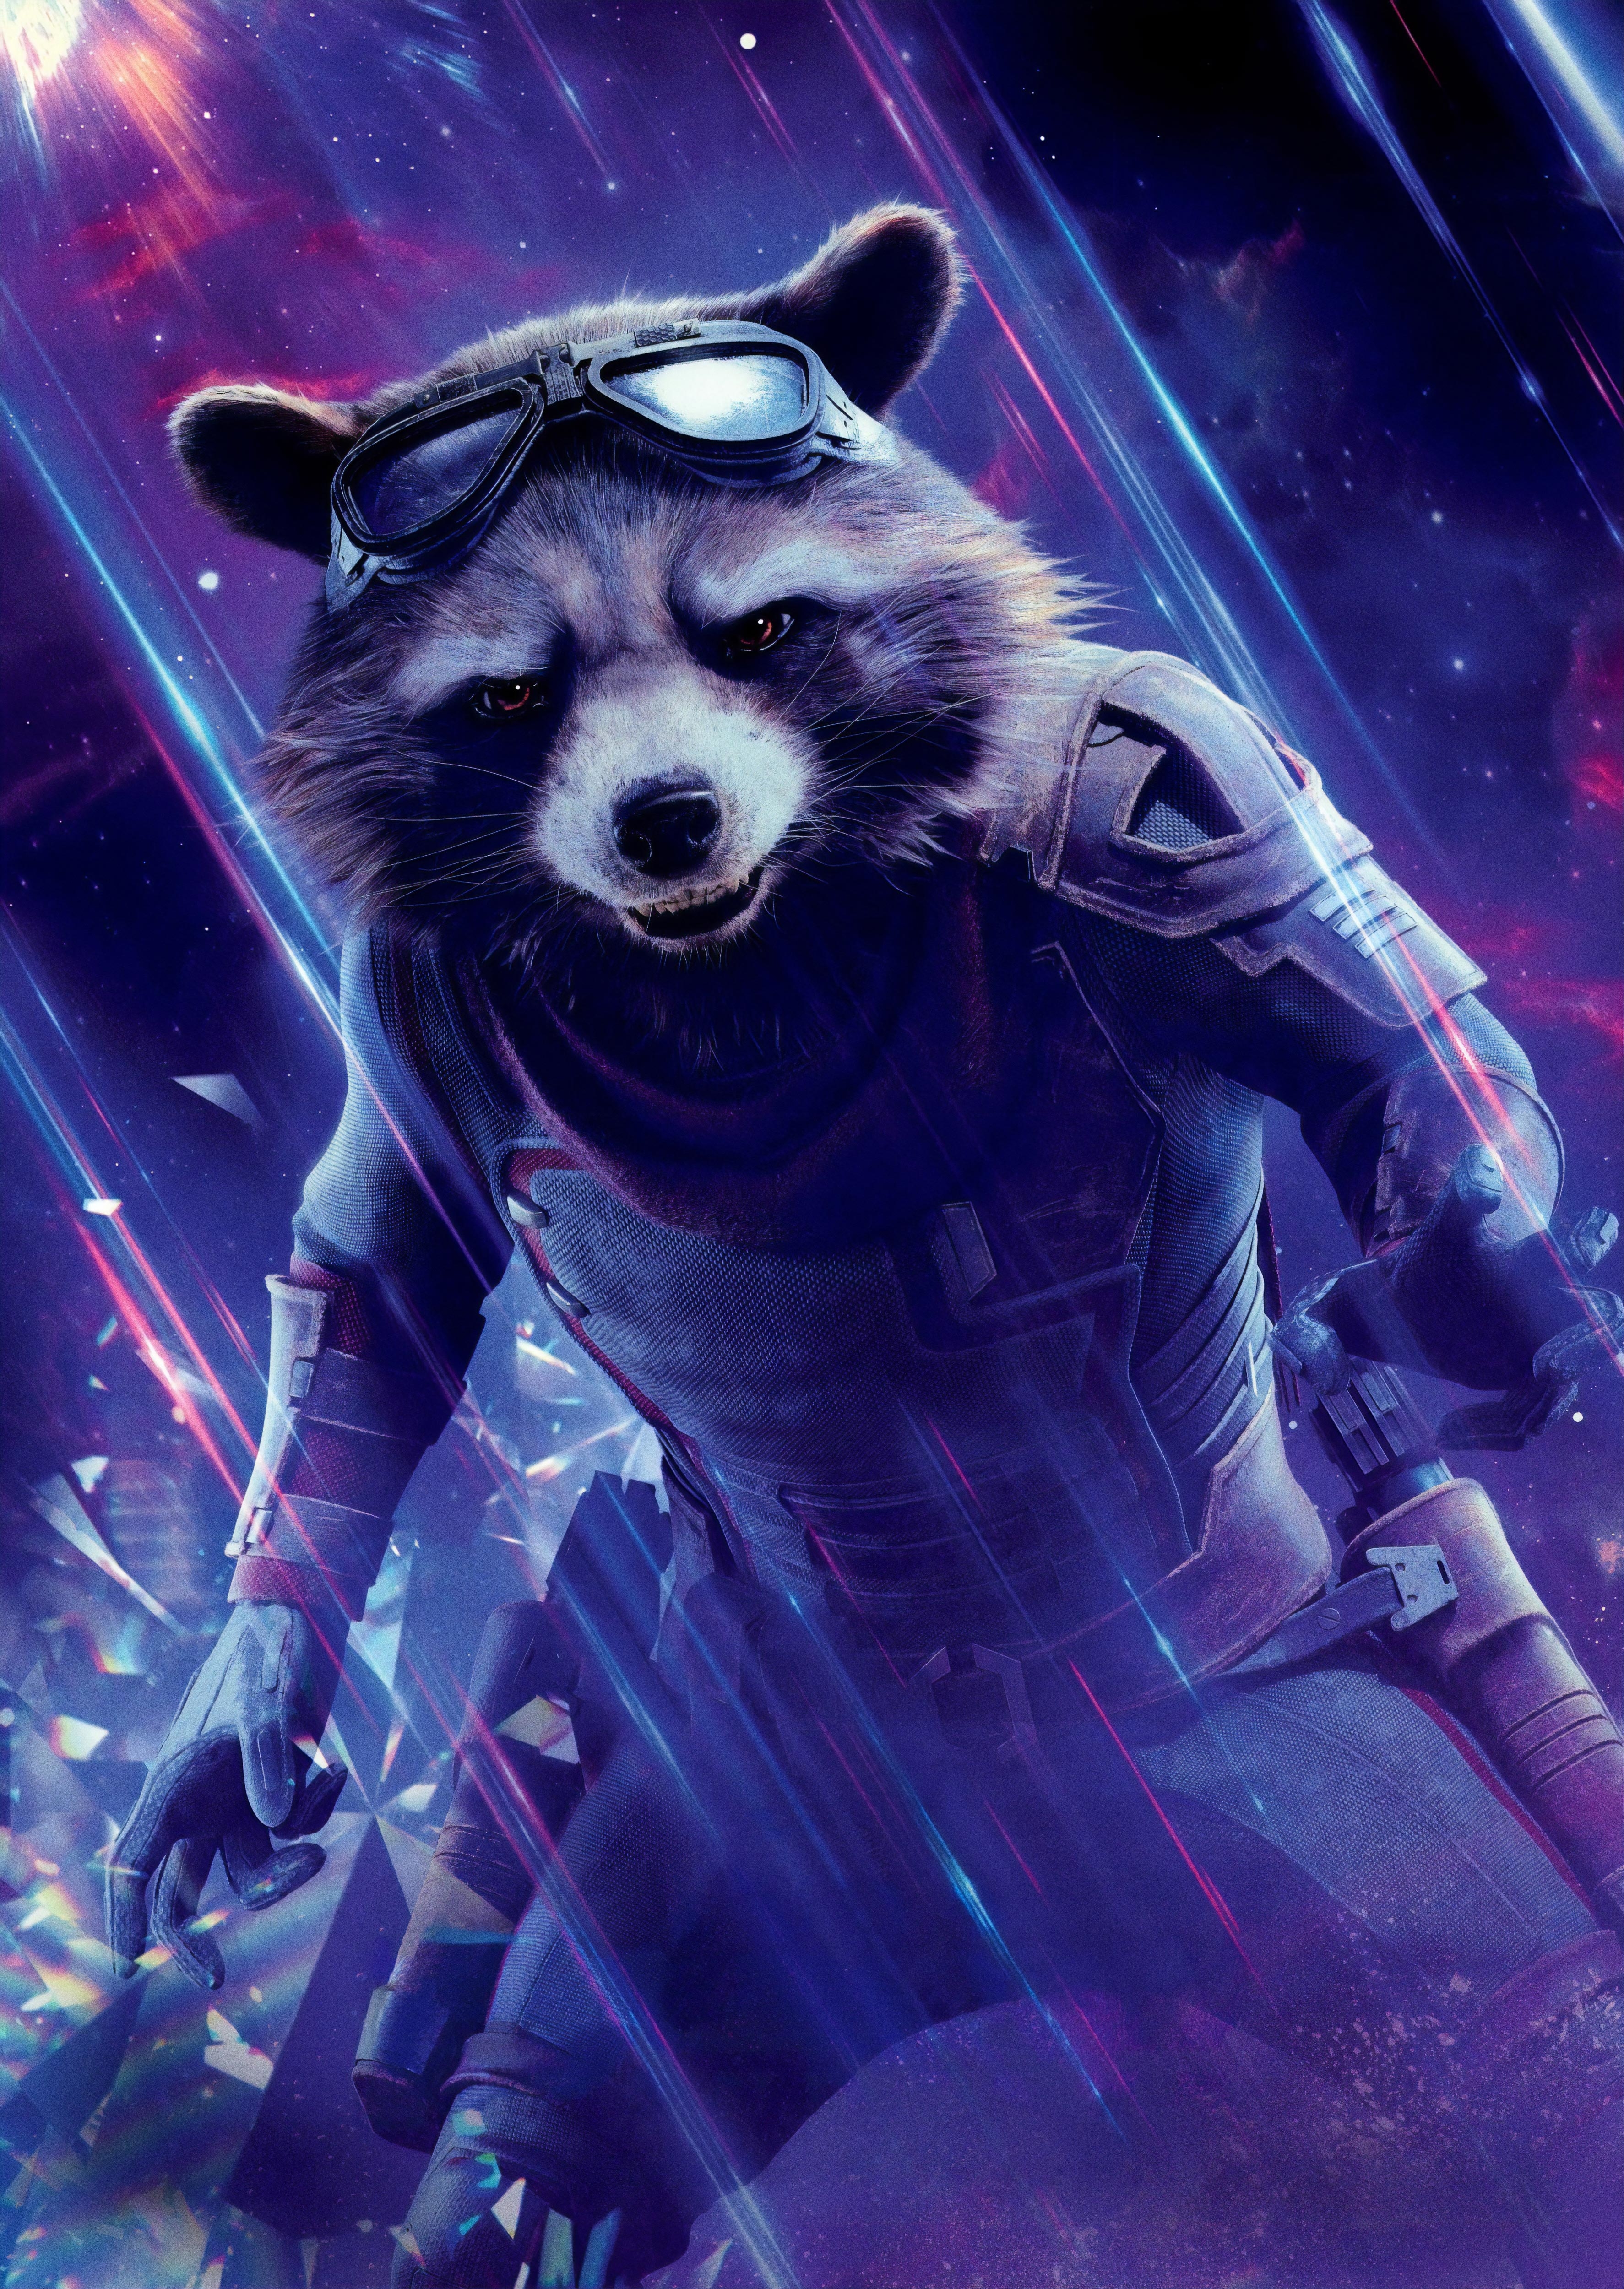 Rocket Raccoon in Avengers Endgame Wallpaper, HD Movies 4K Wallpapers